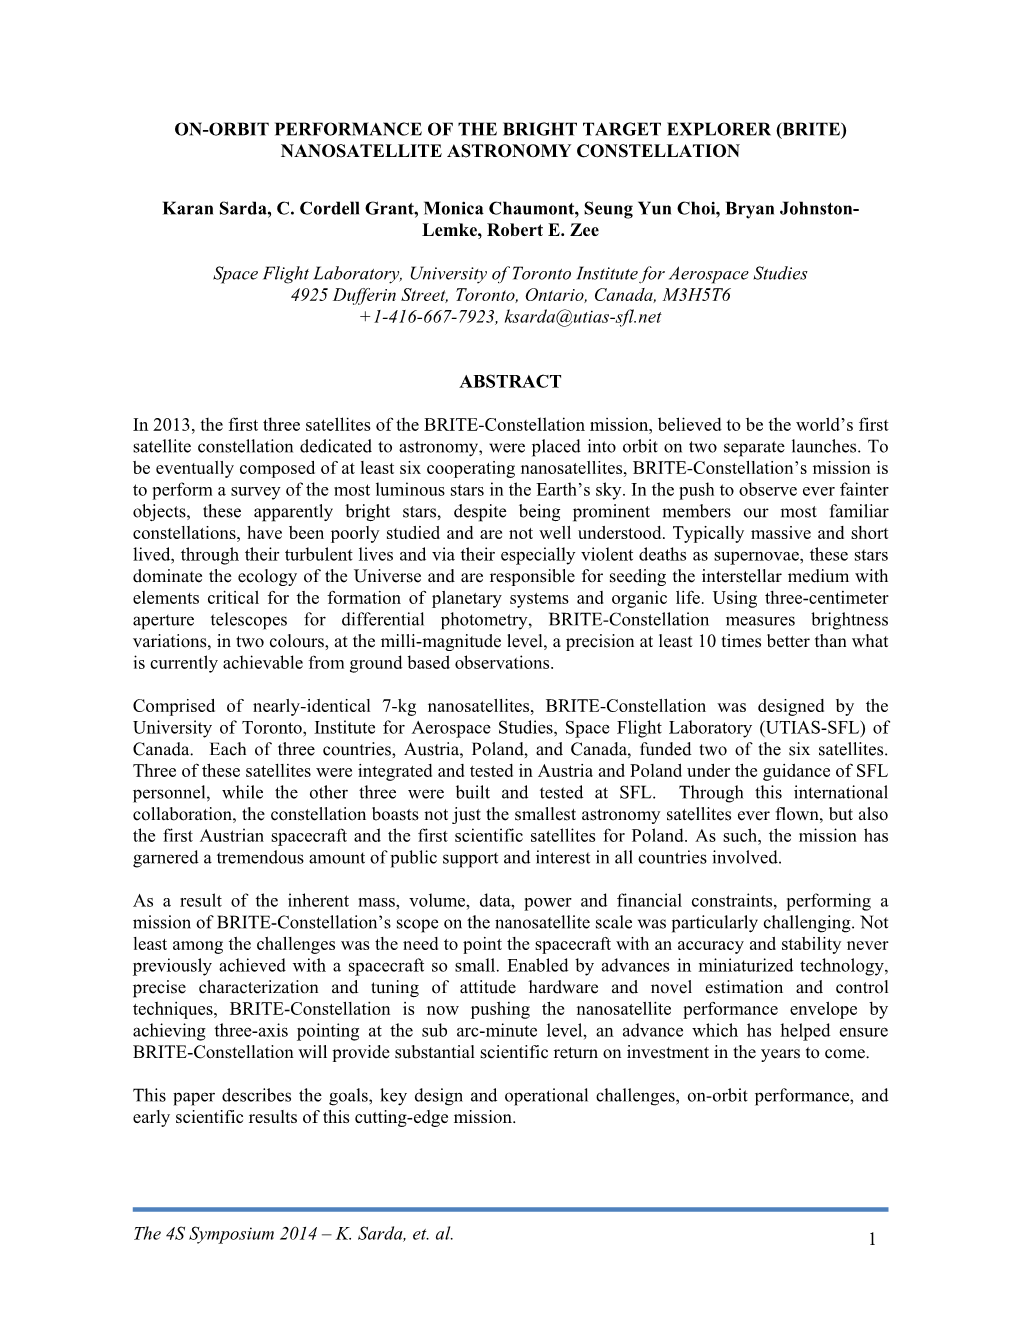 The 4S Symposium 2014 – K. Sarda, Et. Al. 1 ON-ORBIT PERFORMANCE of the BRIGHT TARGET EXPLORER (BRITE) NANOSATELLITE ASTRONOMY